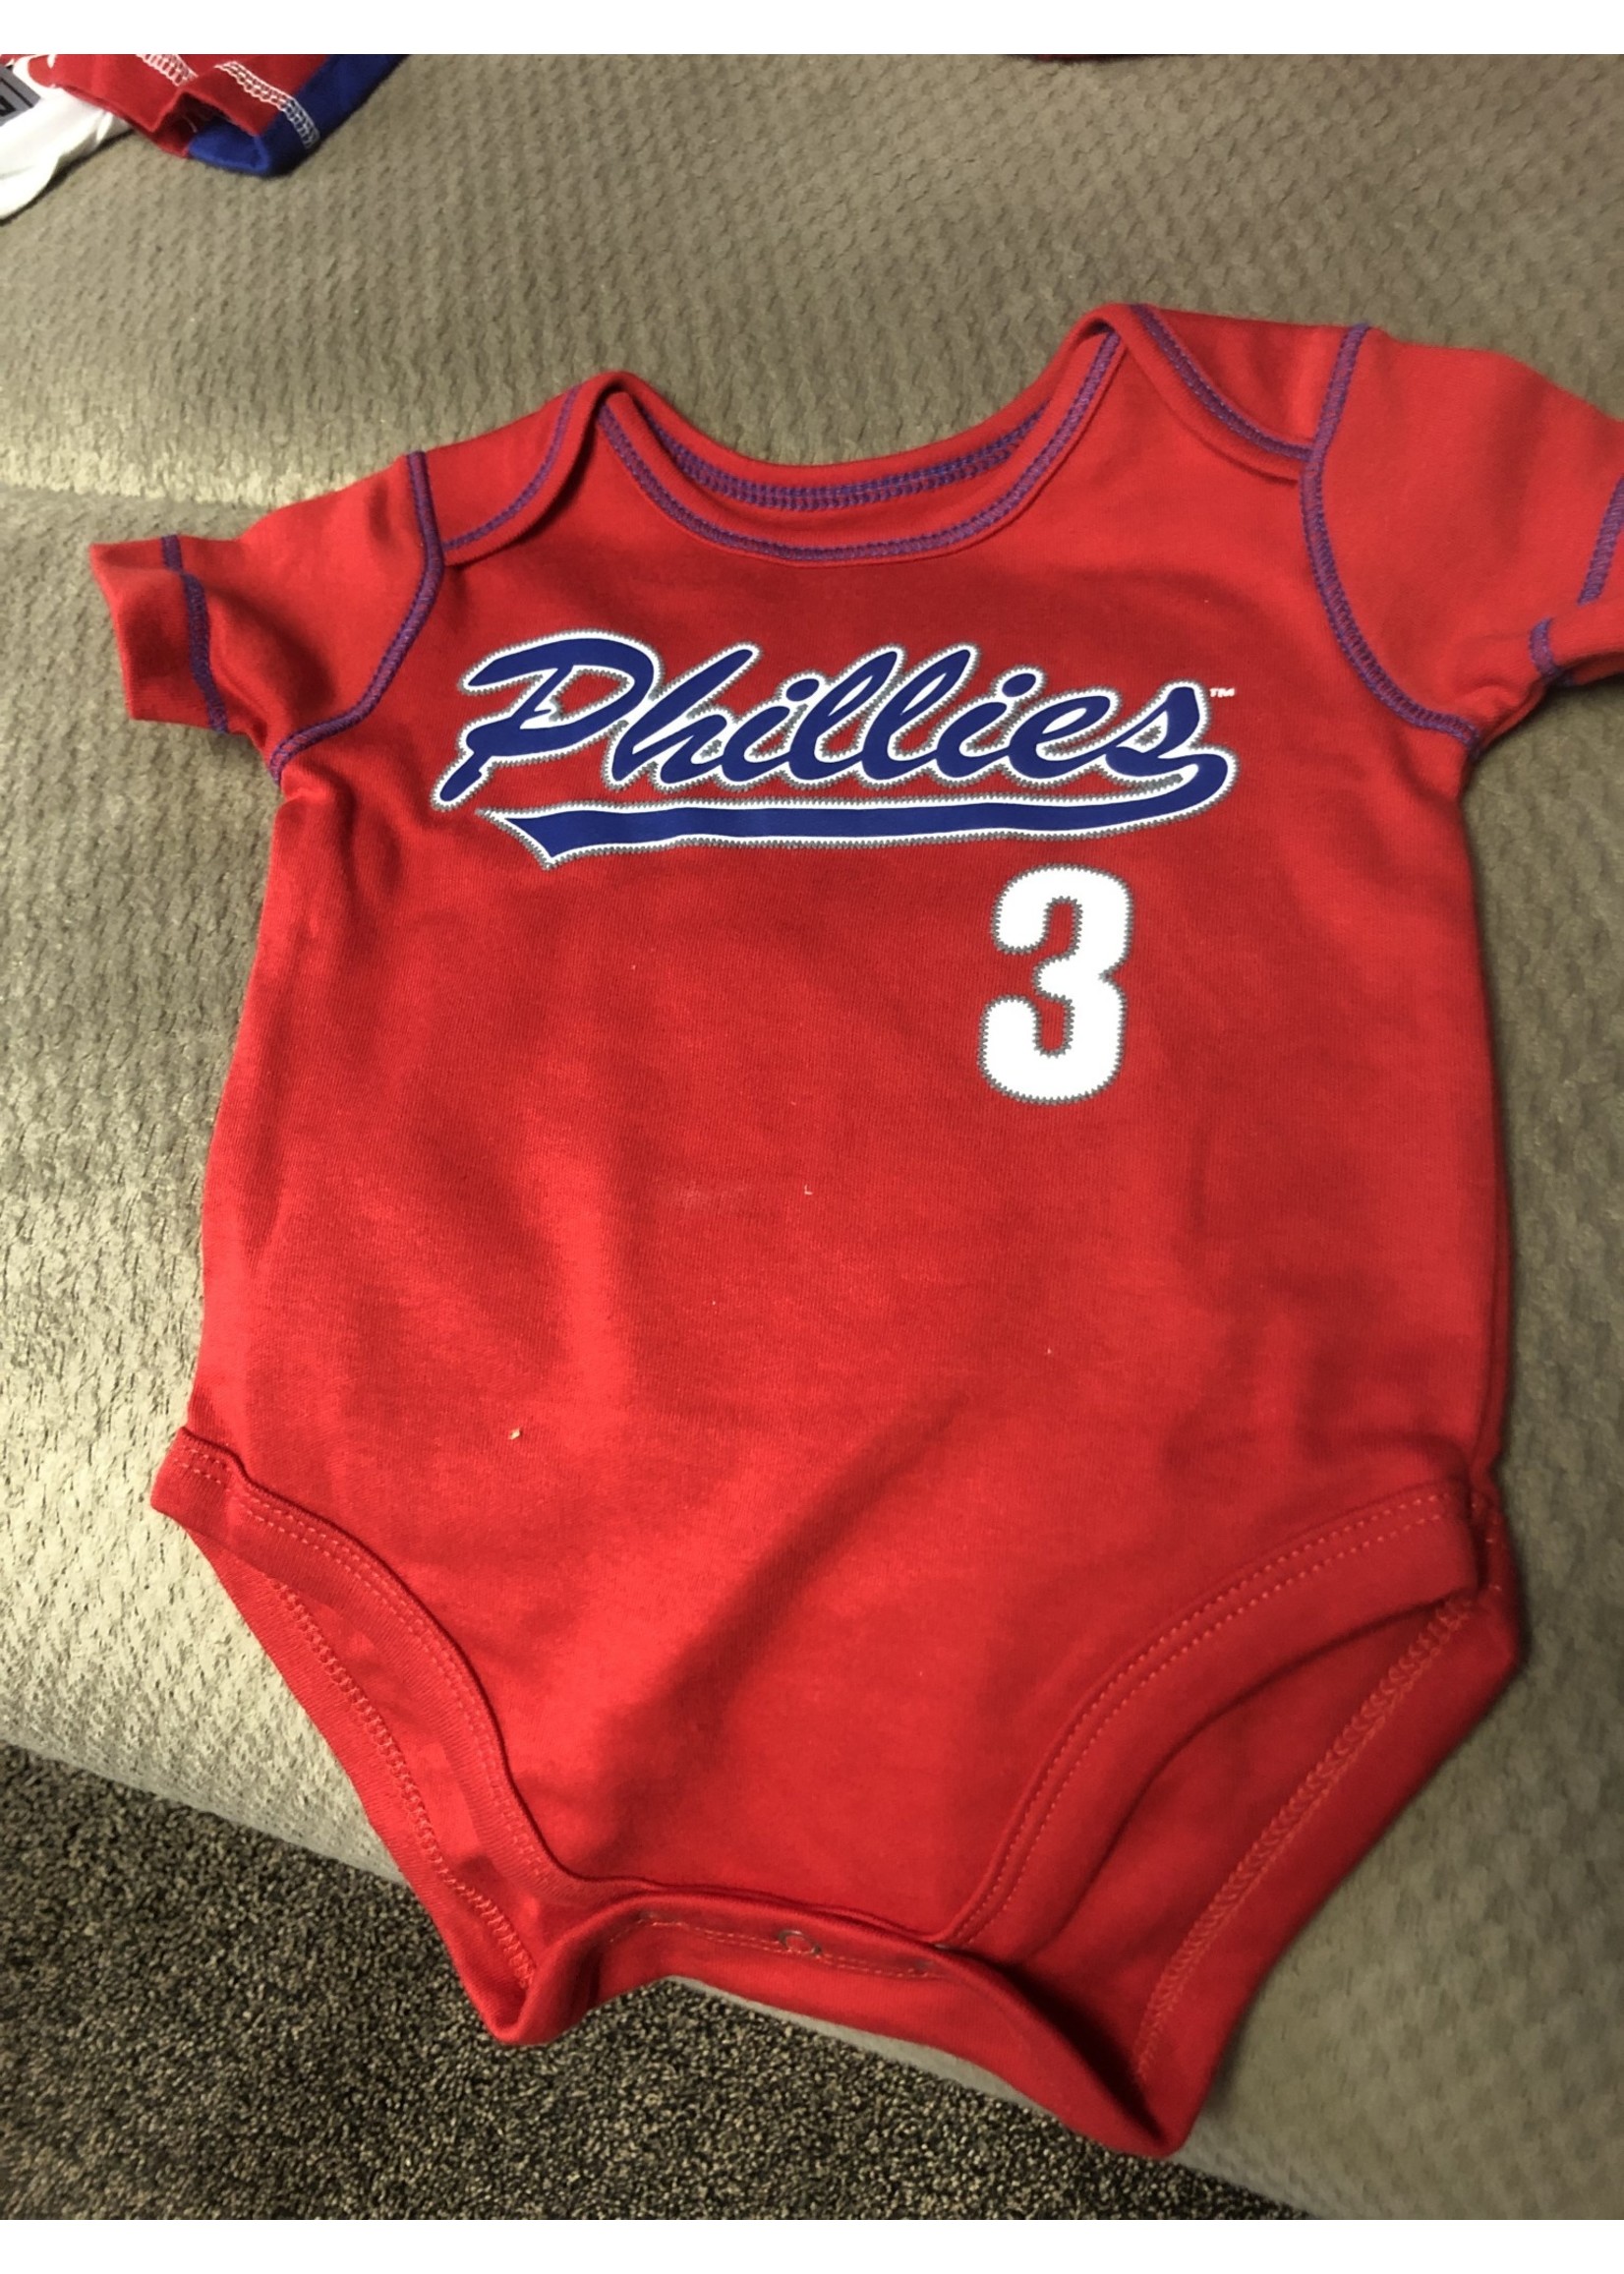 Philadelphia Phillies Baby Apparel, Phillies Infant Jerseys, Toddler Apparel